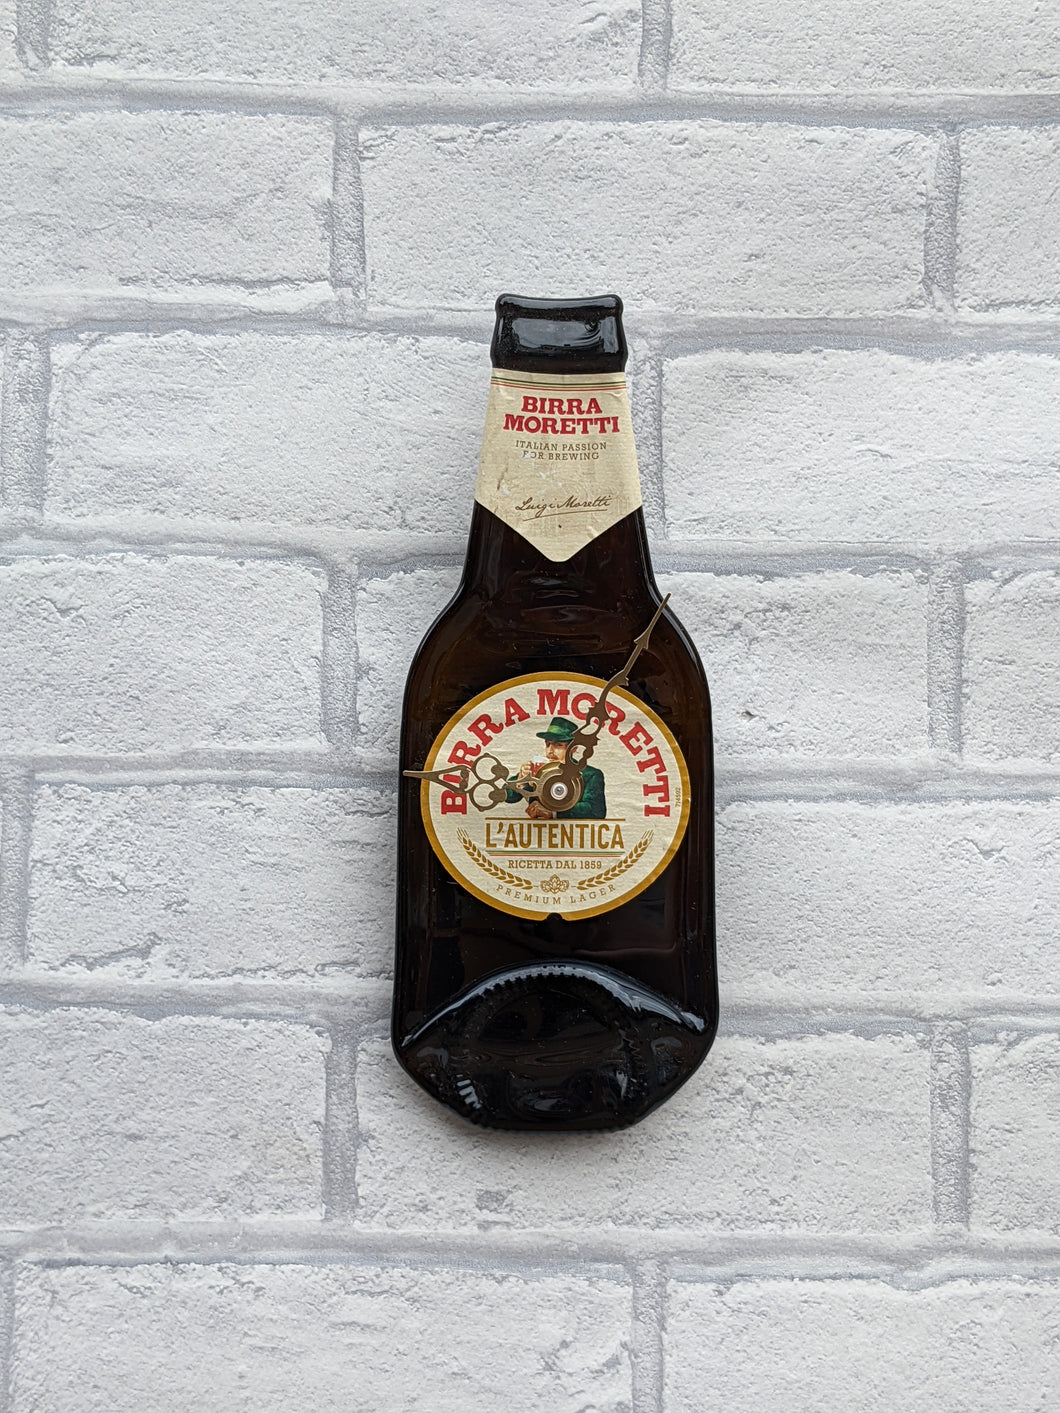 Birra Moretti beer bottle clock